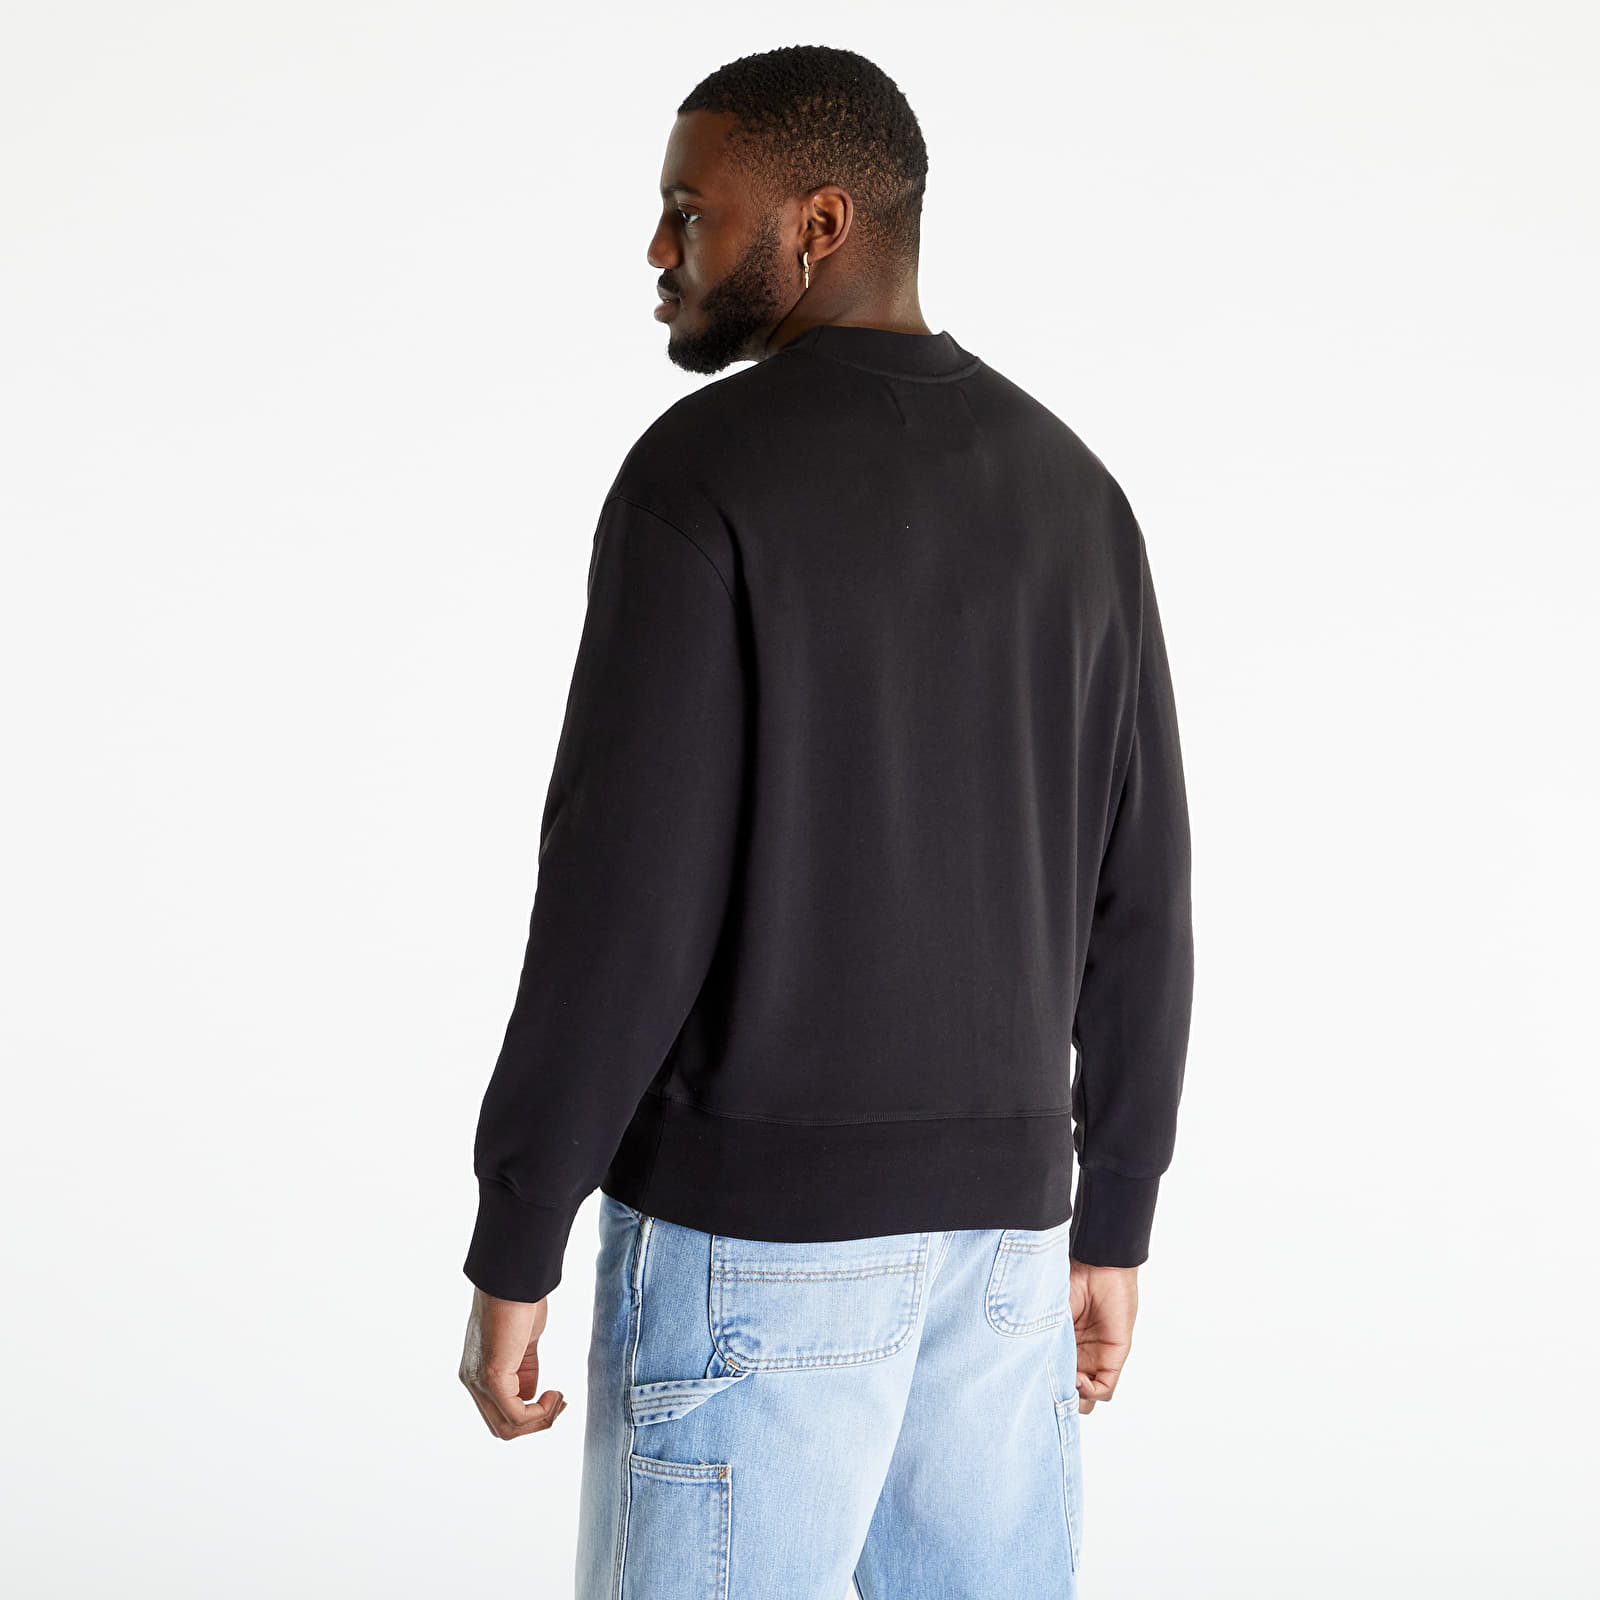 Blur Motion Klein Jeans sweatshirts Hoodies Calvin Footshop Black and Photopri Sweatshirt |